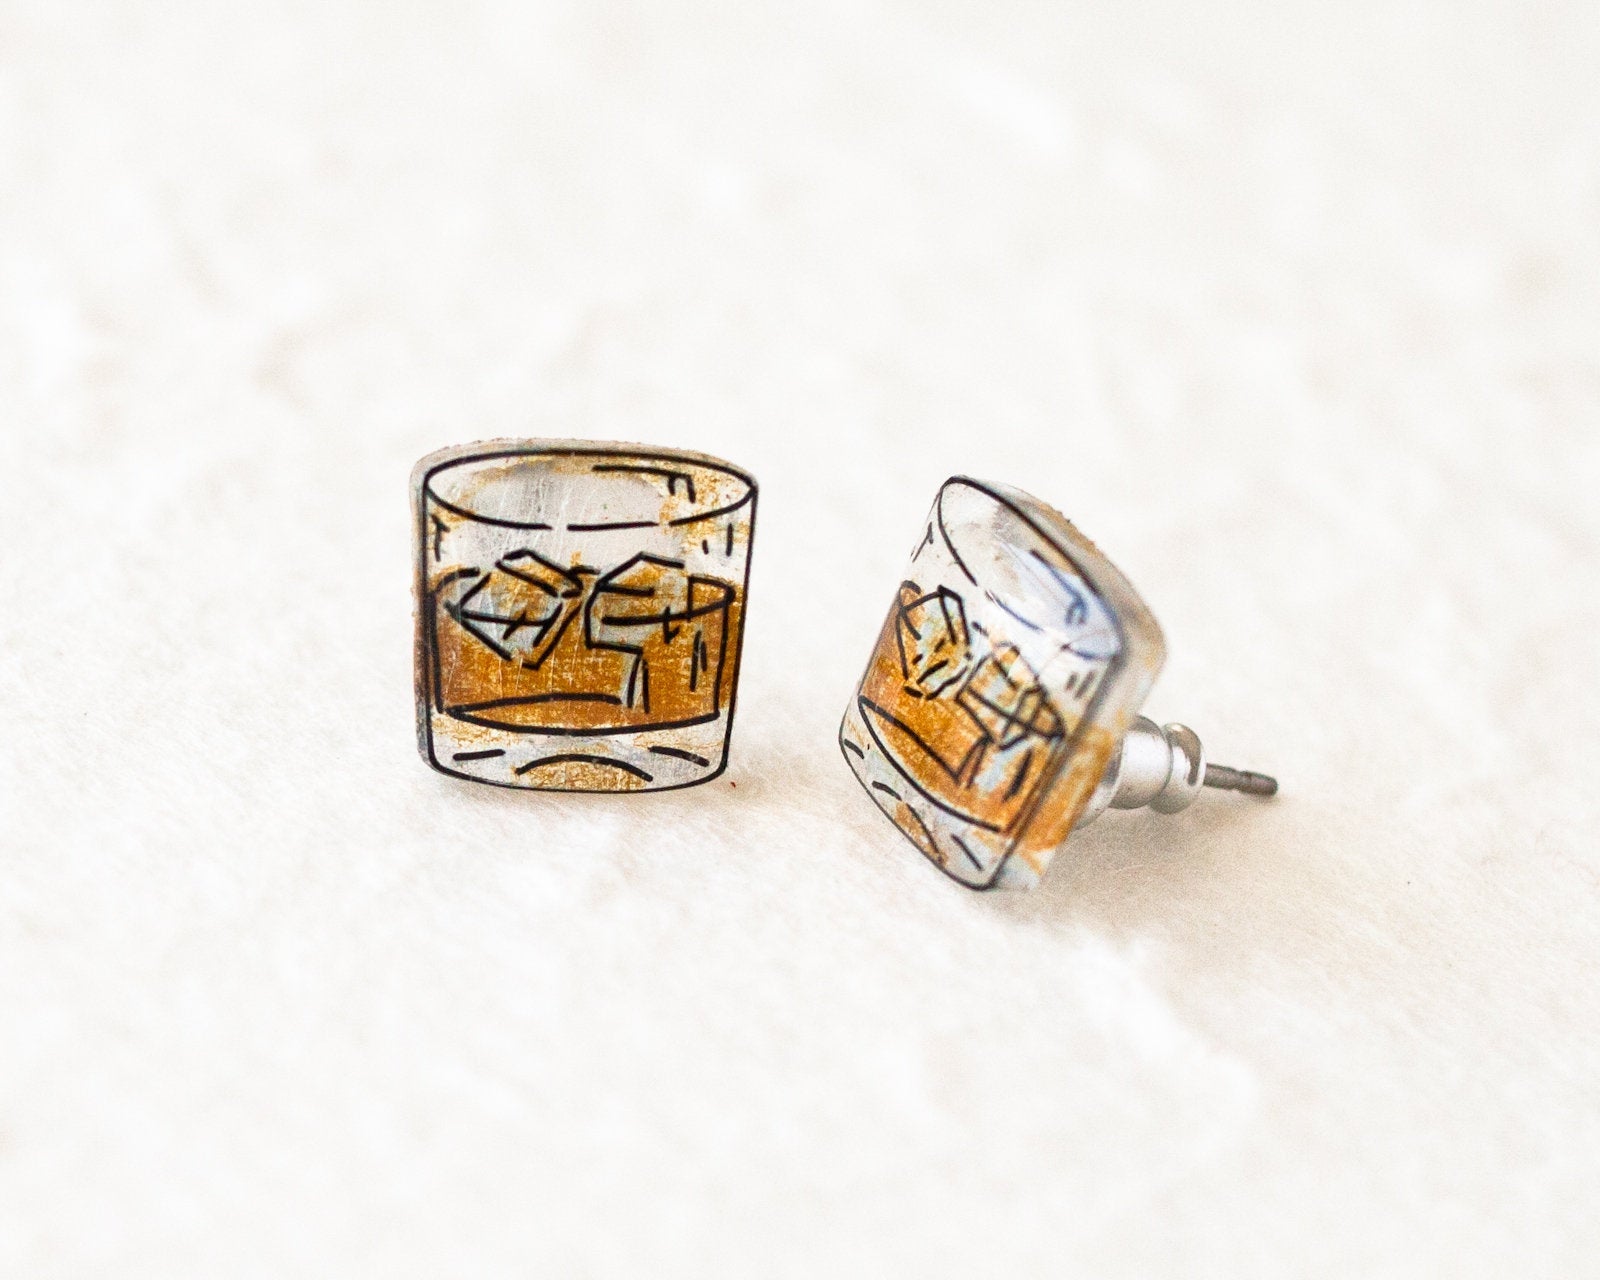 Whiskey Glass Stud Earrings